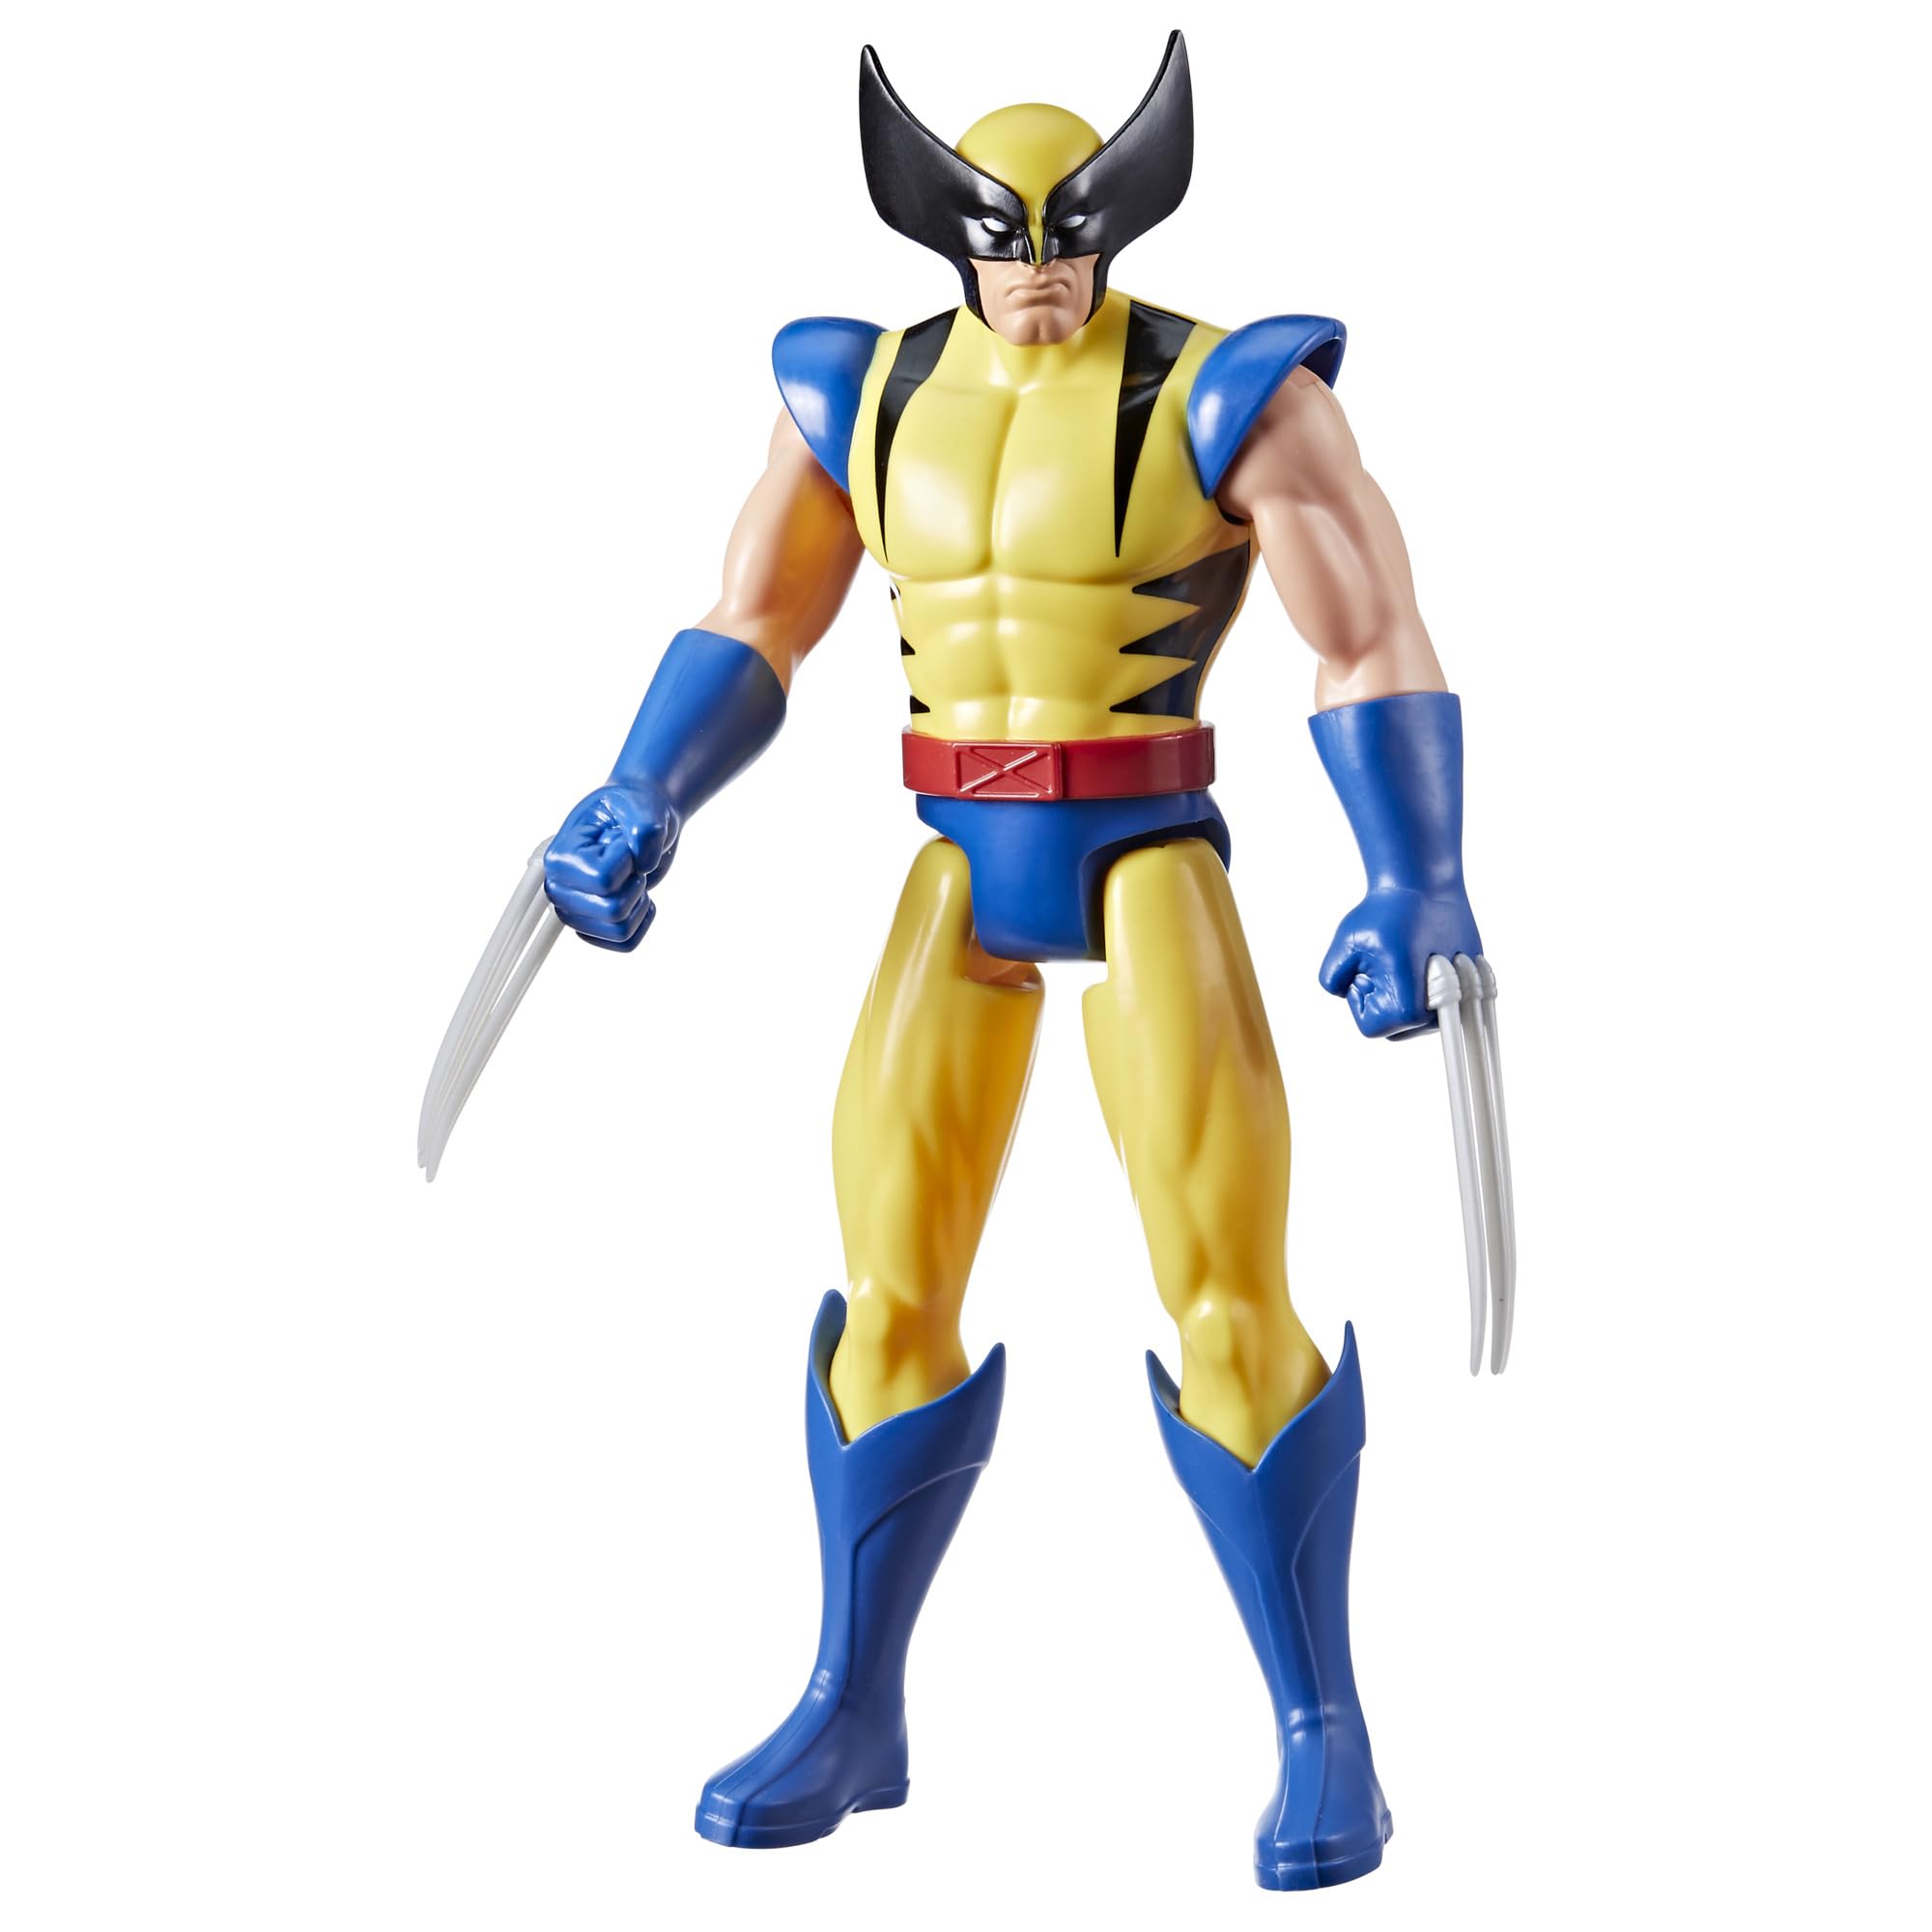 Wolverine action figure